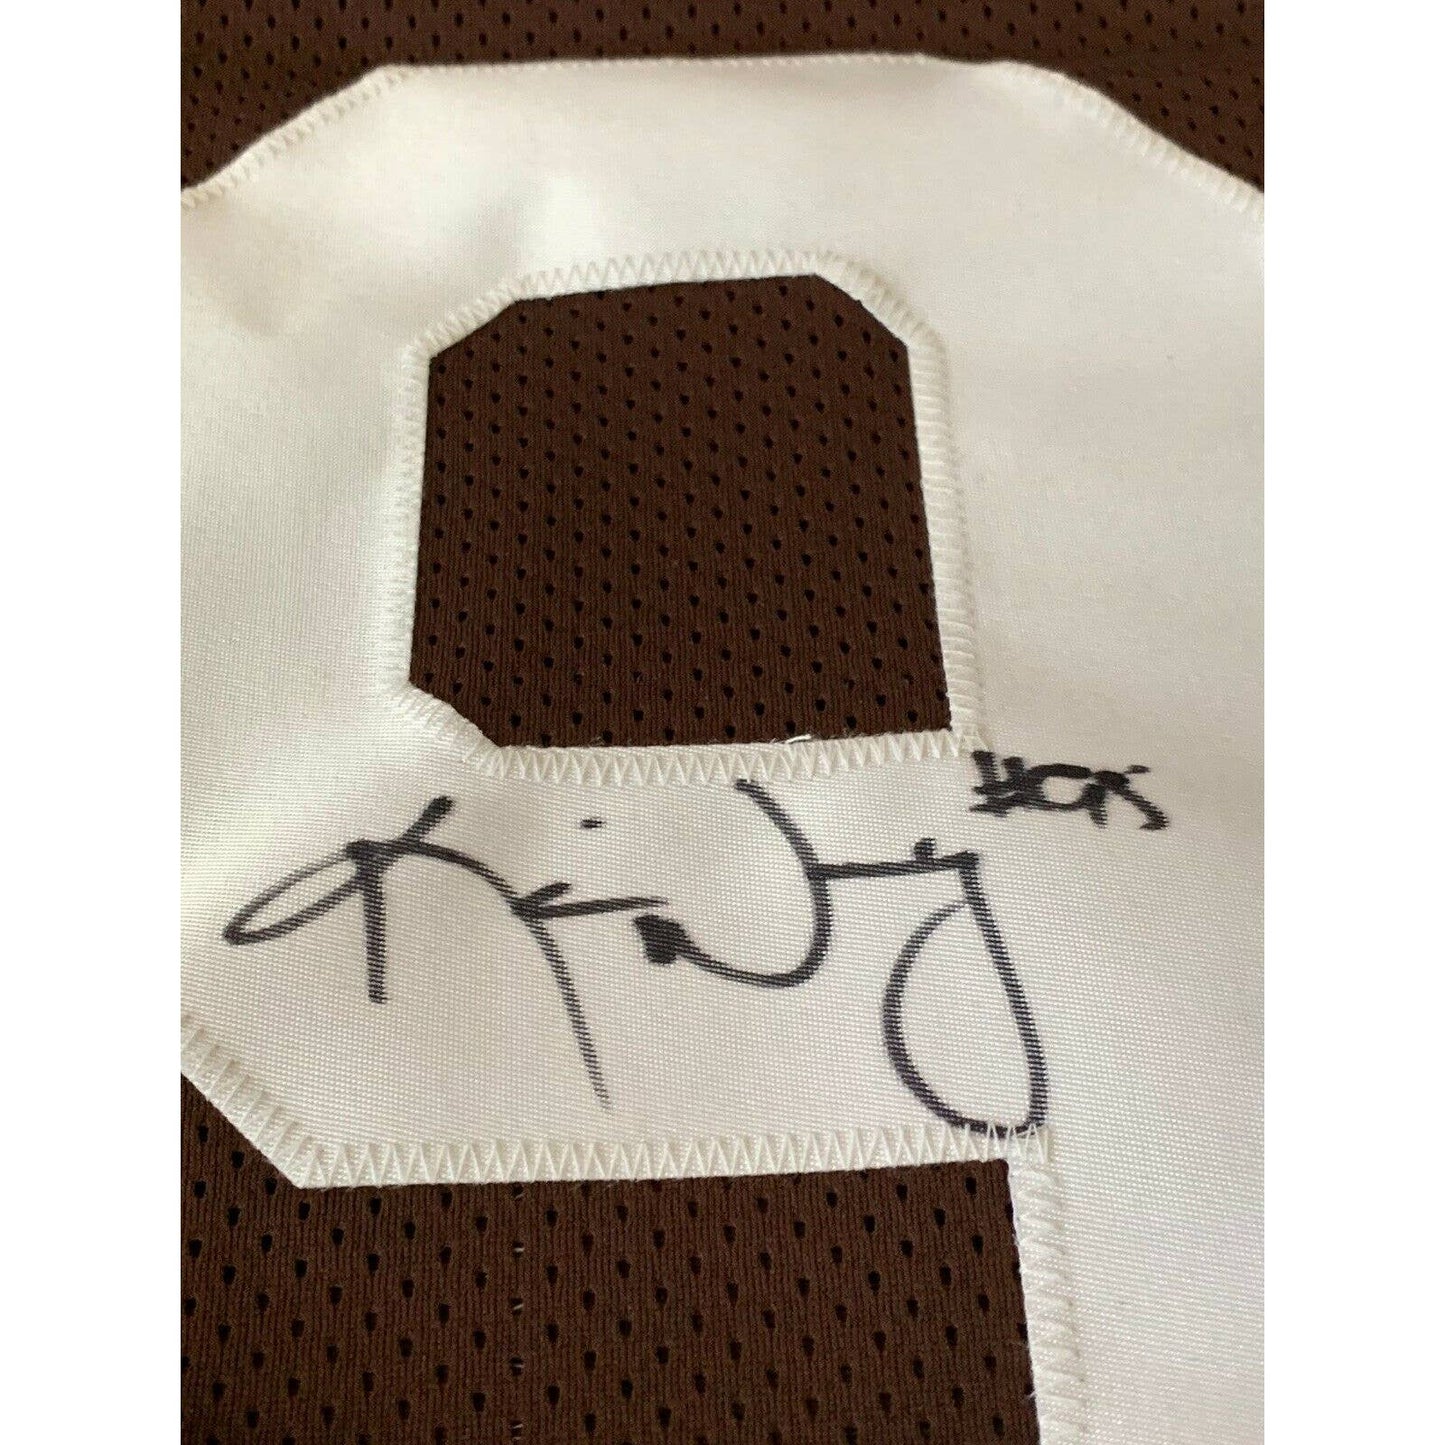 Kamerion Wimbley Autographed/Signed Jersey PSA/DNA COA Cleveland Browns Cameron - TreasuresEvolved